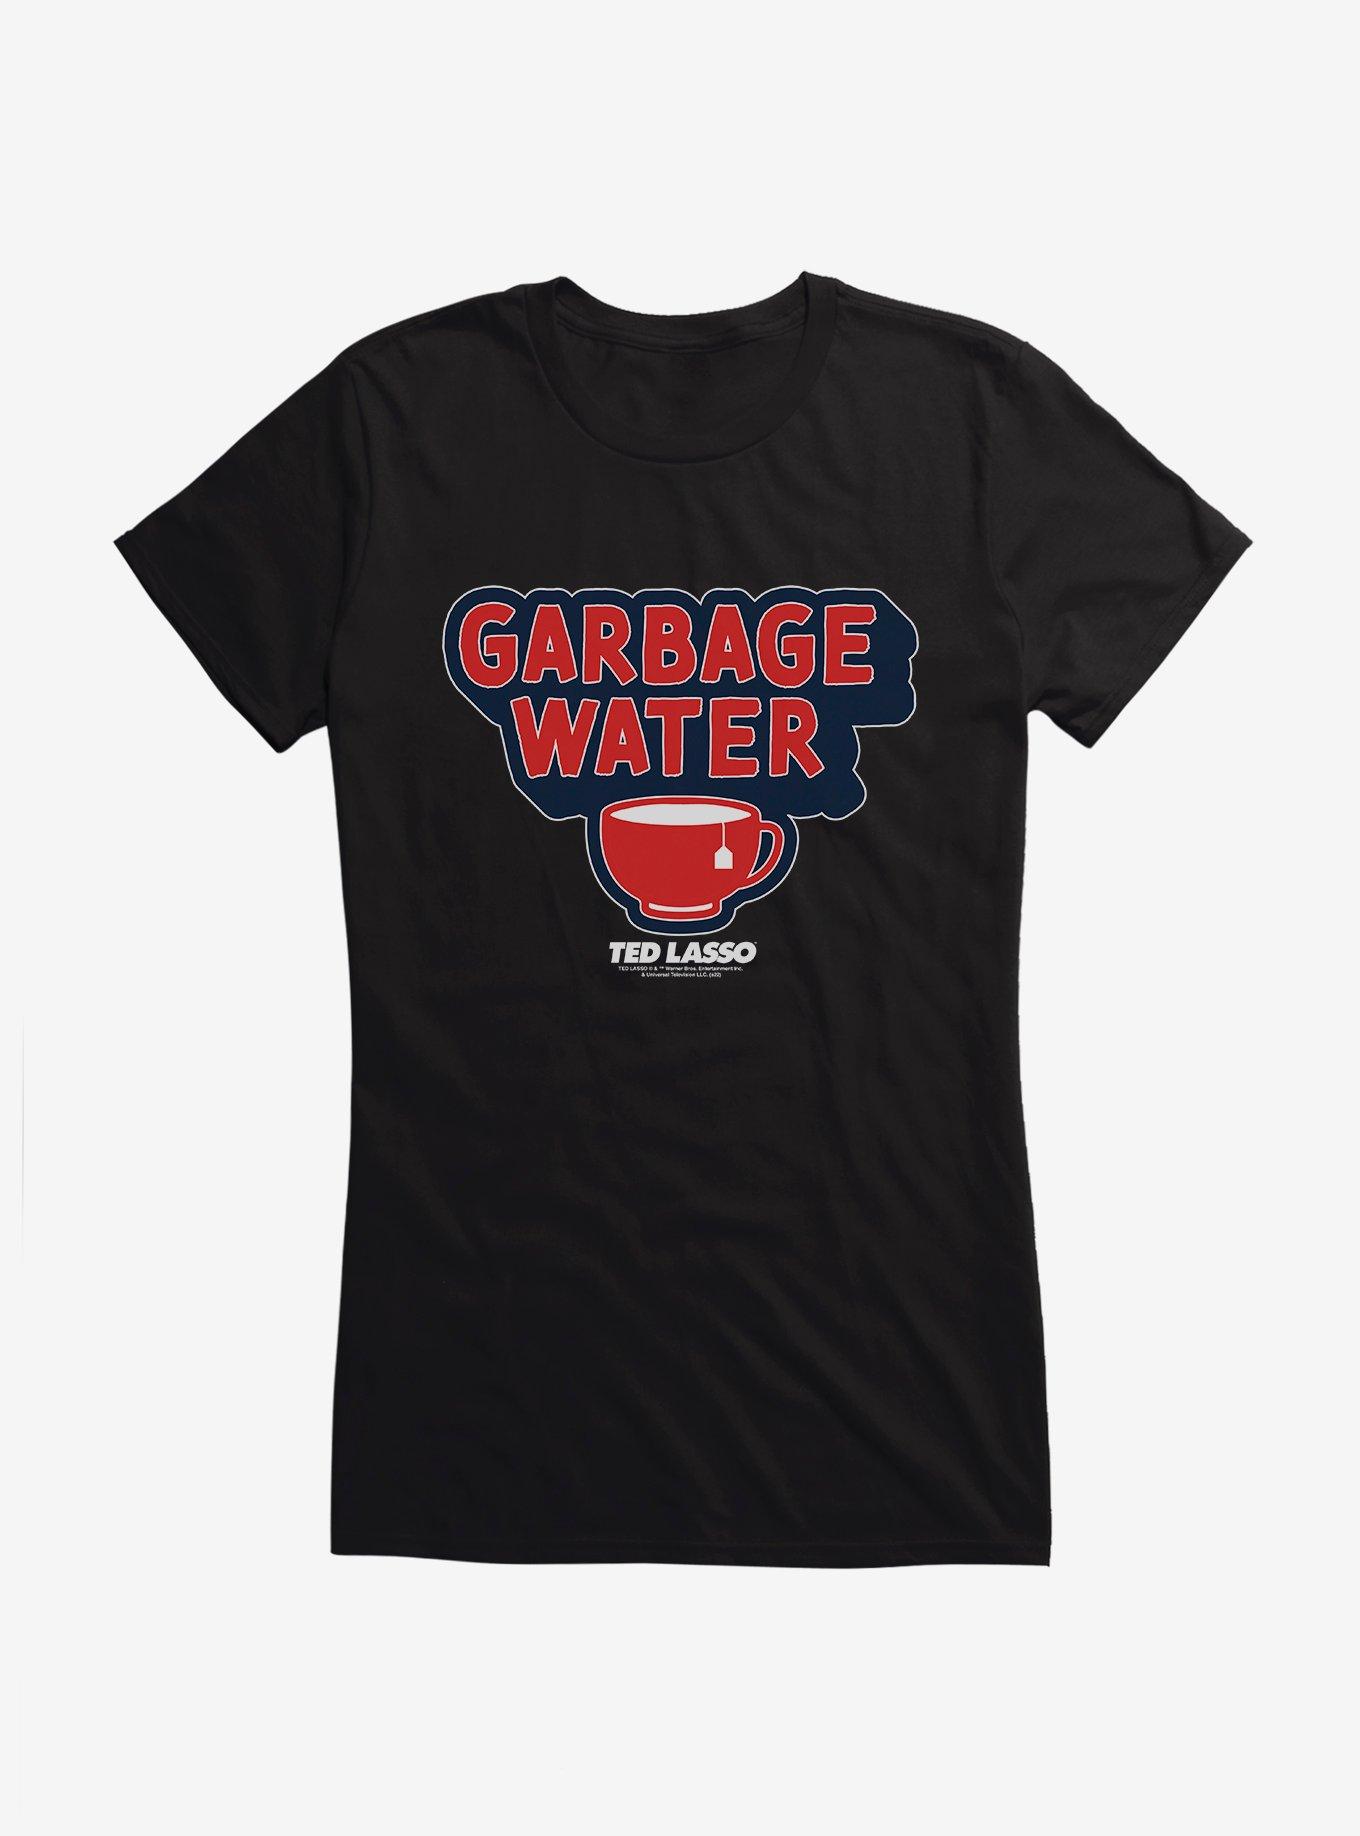 Ted Lasso Garbage Water Girls T-Shirt